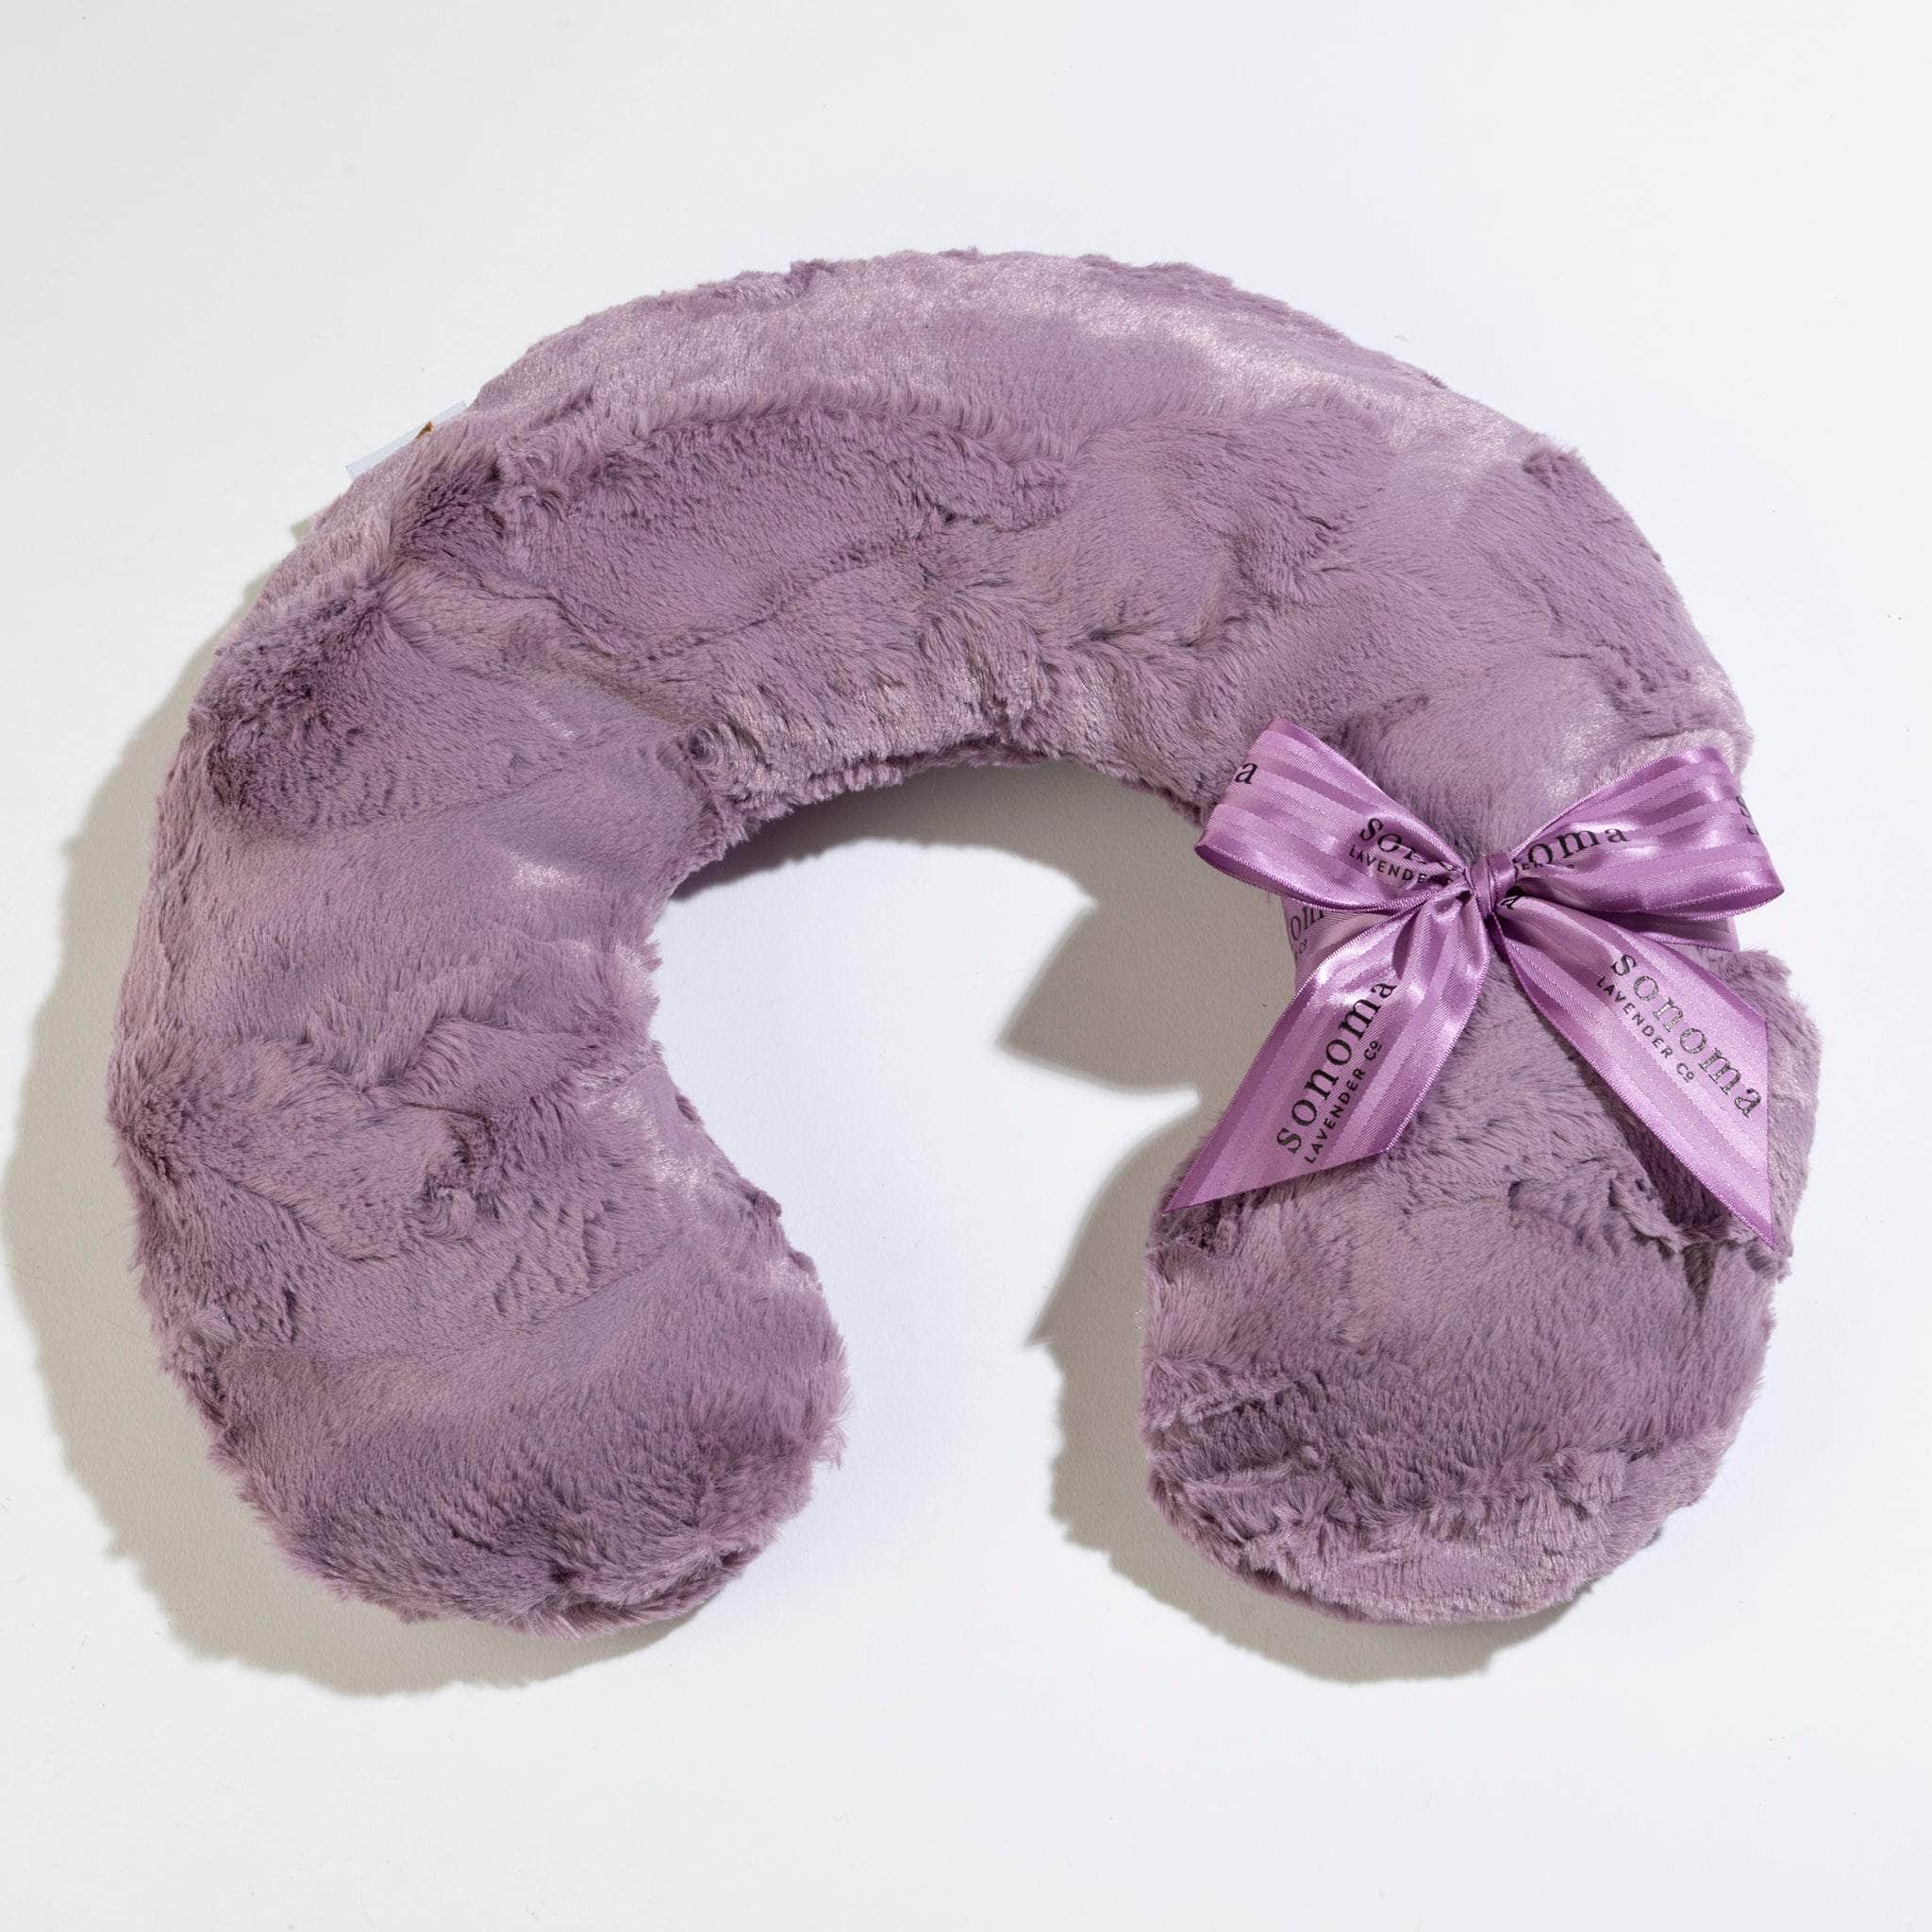 Lavender Spa Neck Pillow- Elderberry